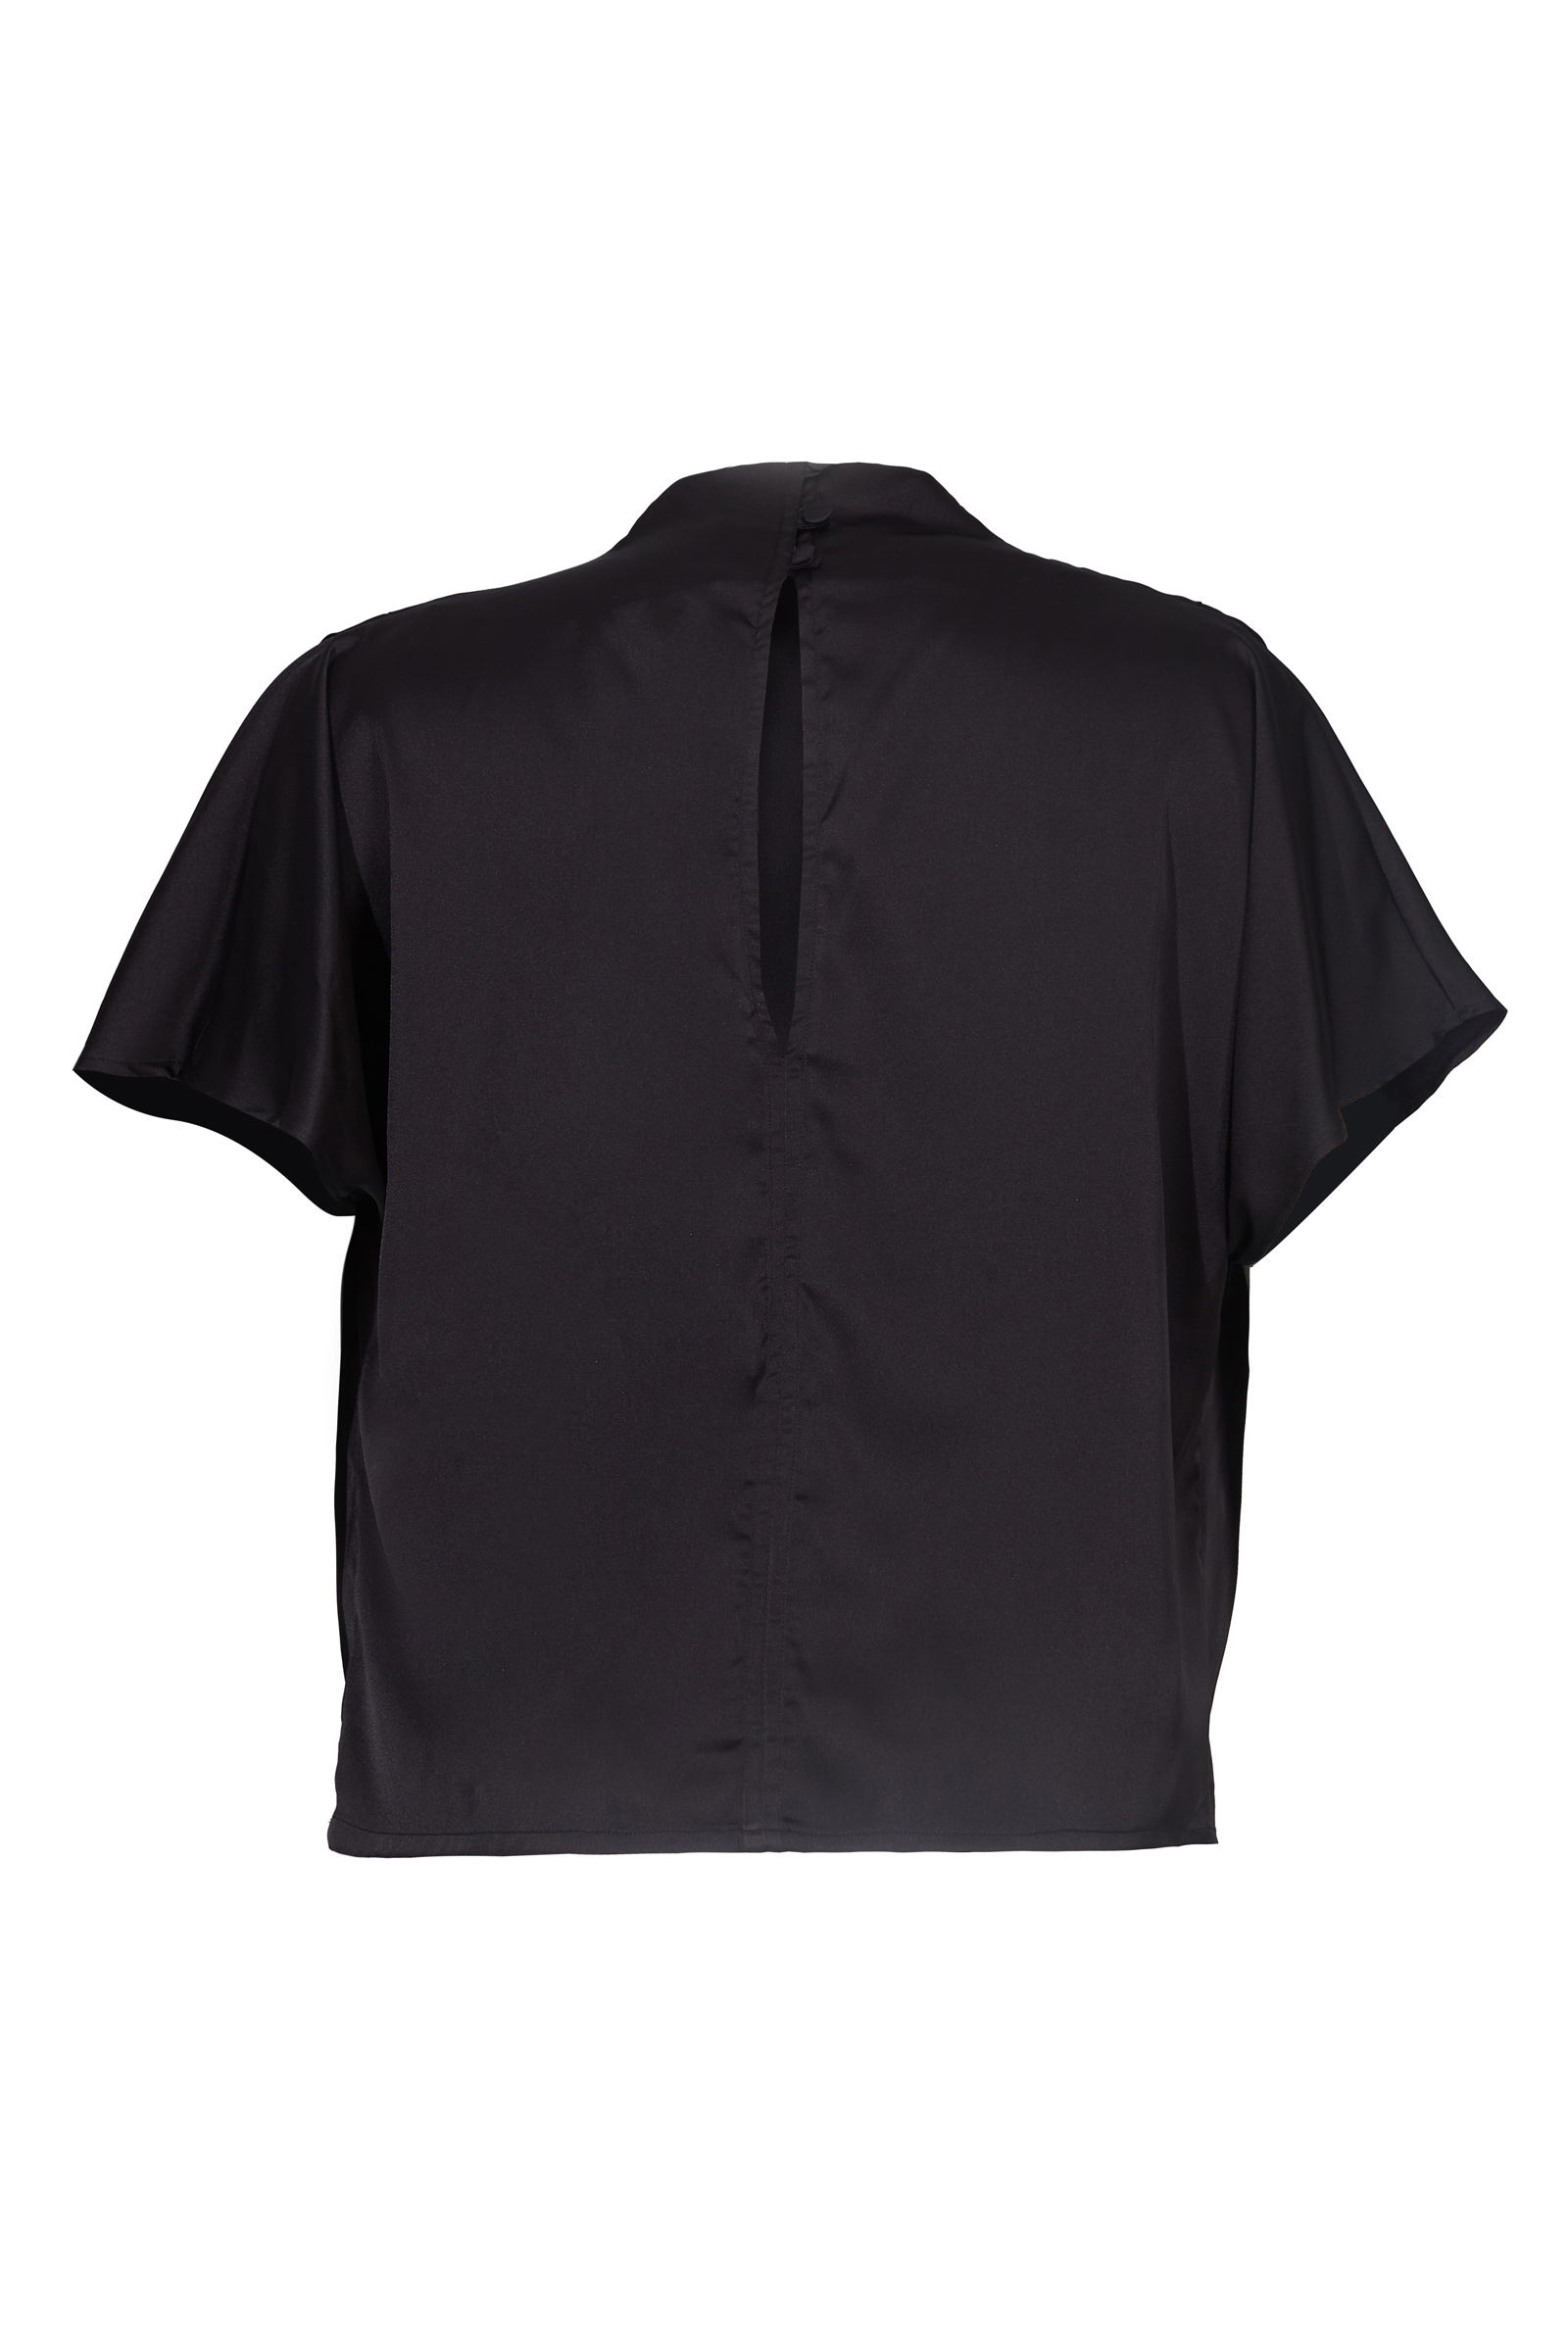 Black Knitted Short Sleeve Shirt